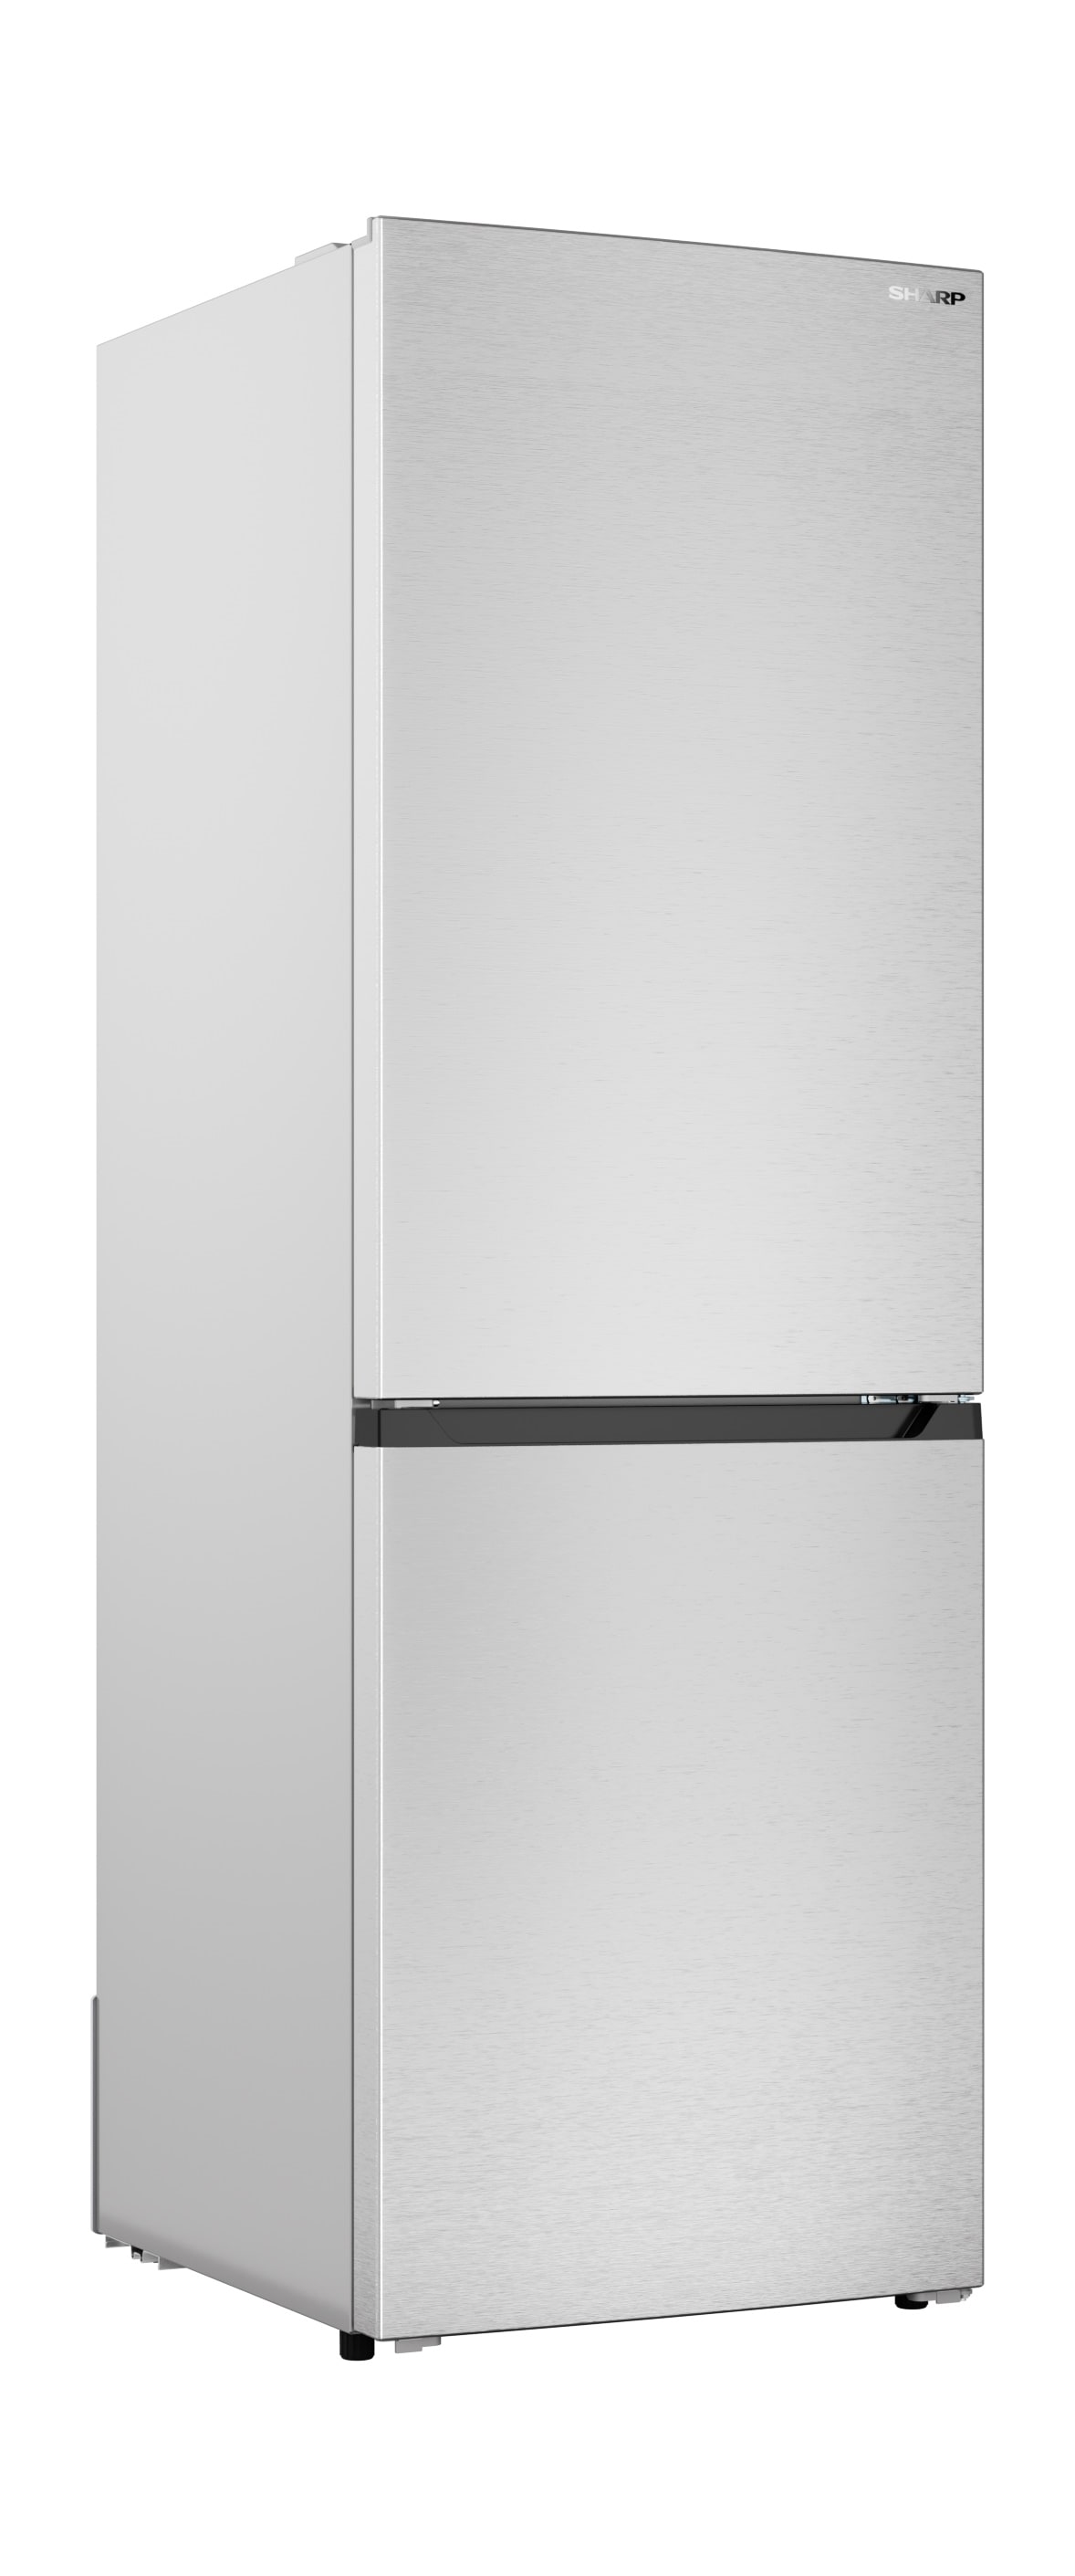 (Stainless Steel) Bottom-Freezer department STAR Bottom-Freezer in 11.5-cu ENERGY Refrigerator at Refrigerators the ft Sharp